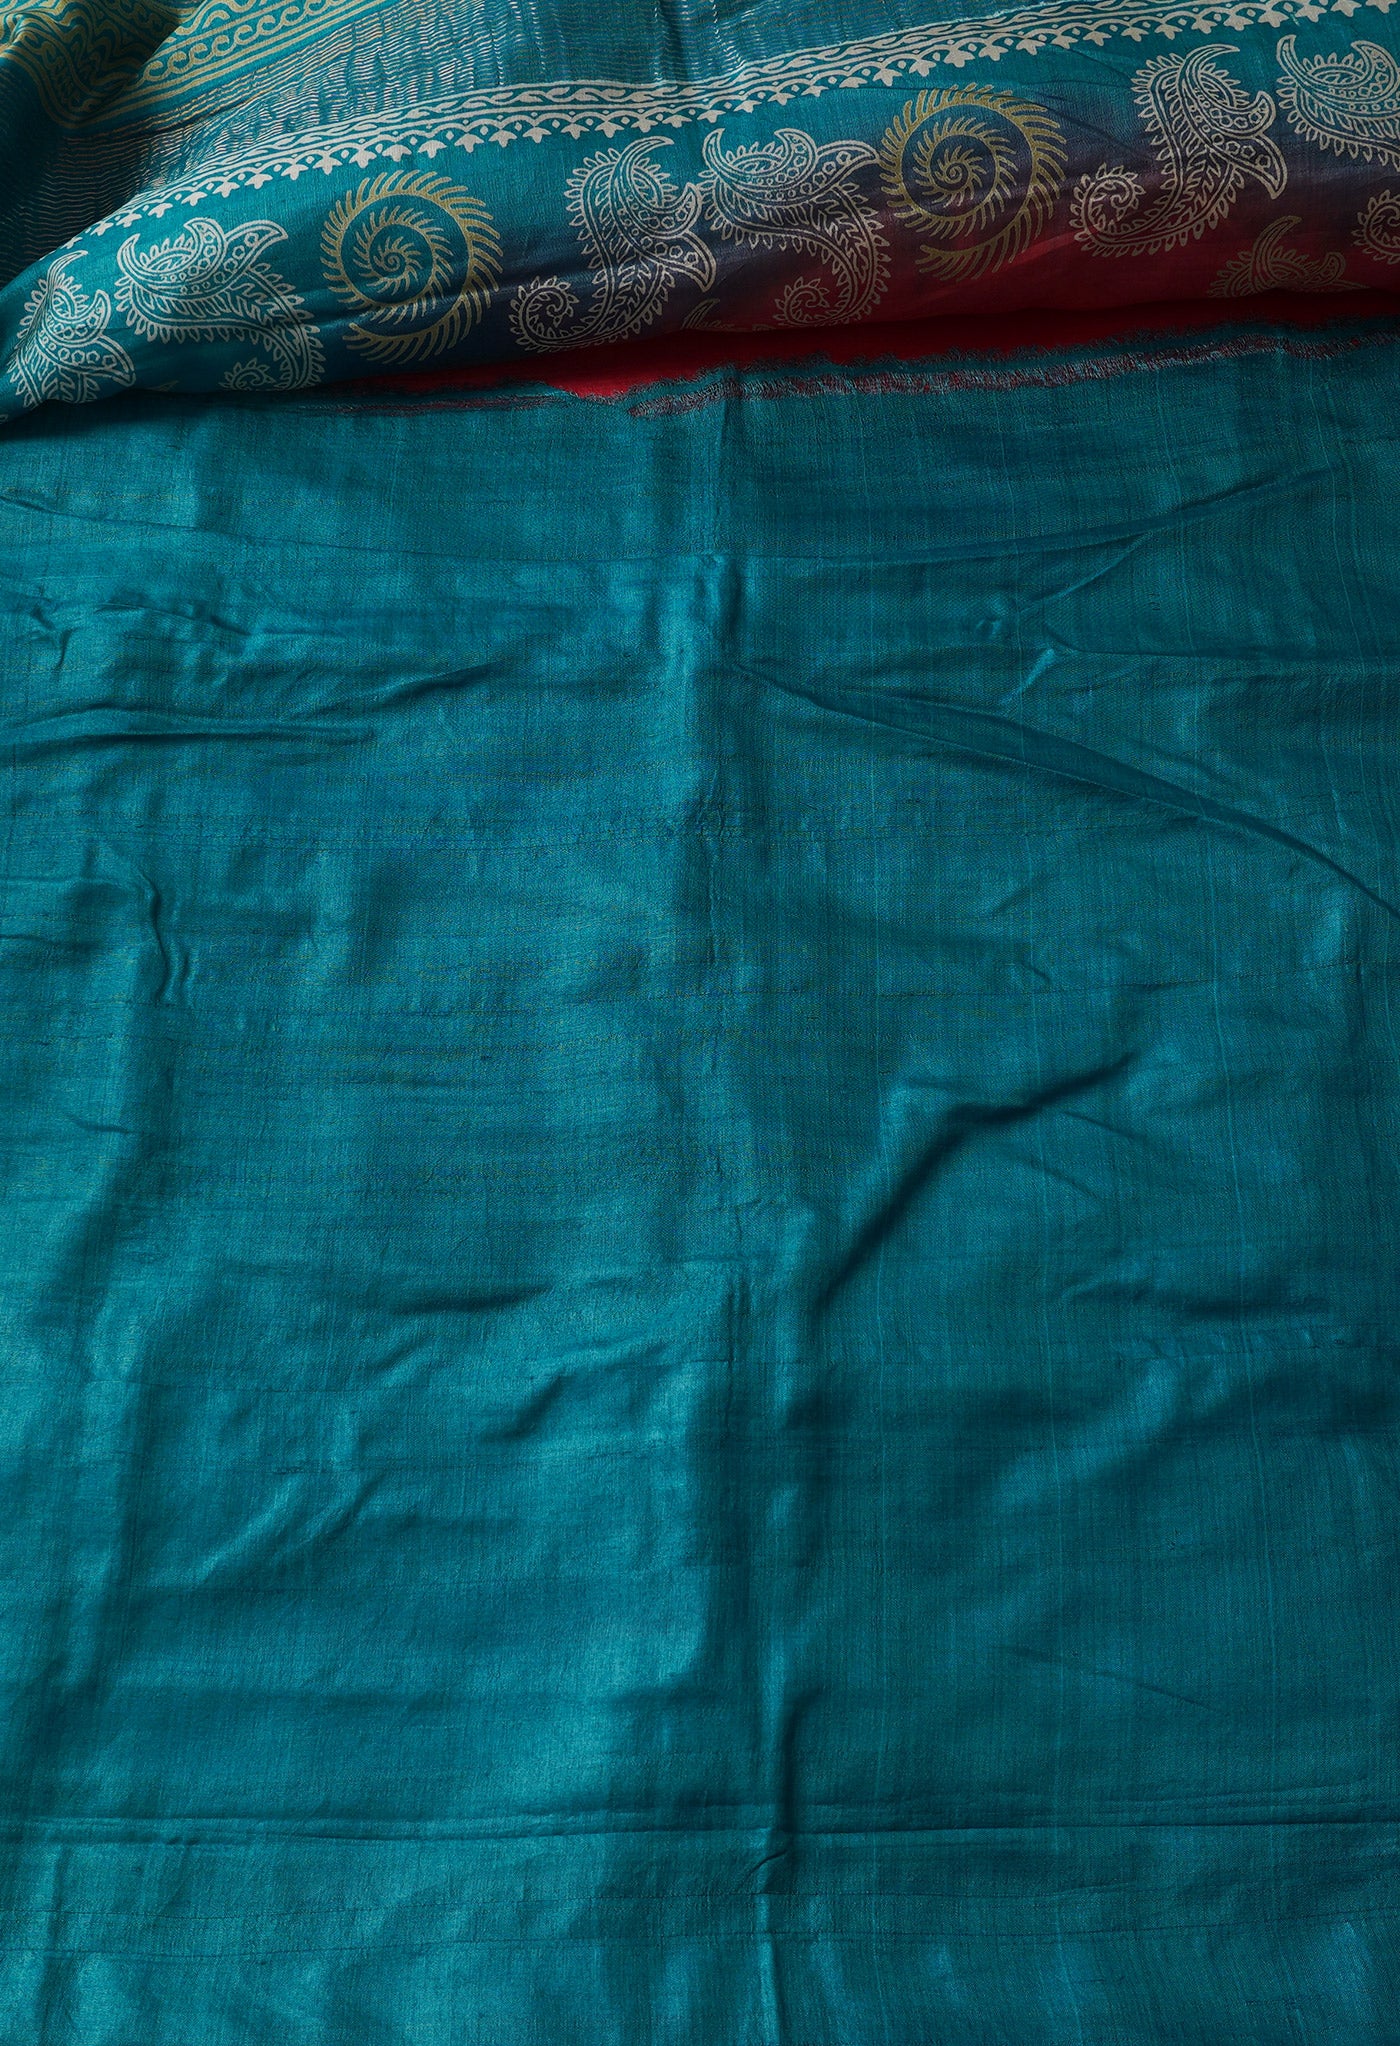 Red-Green Pure Handloom Bengal Tussar Silk Saree-UNM67157